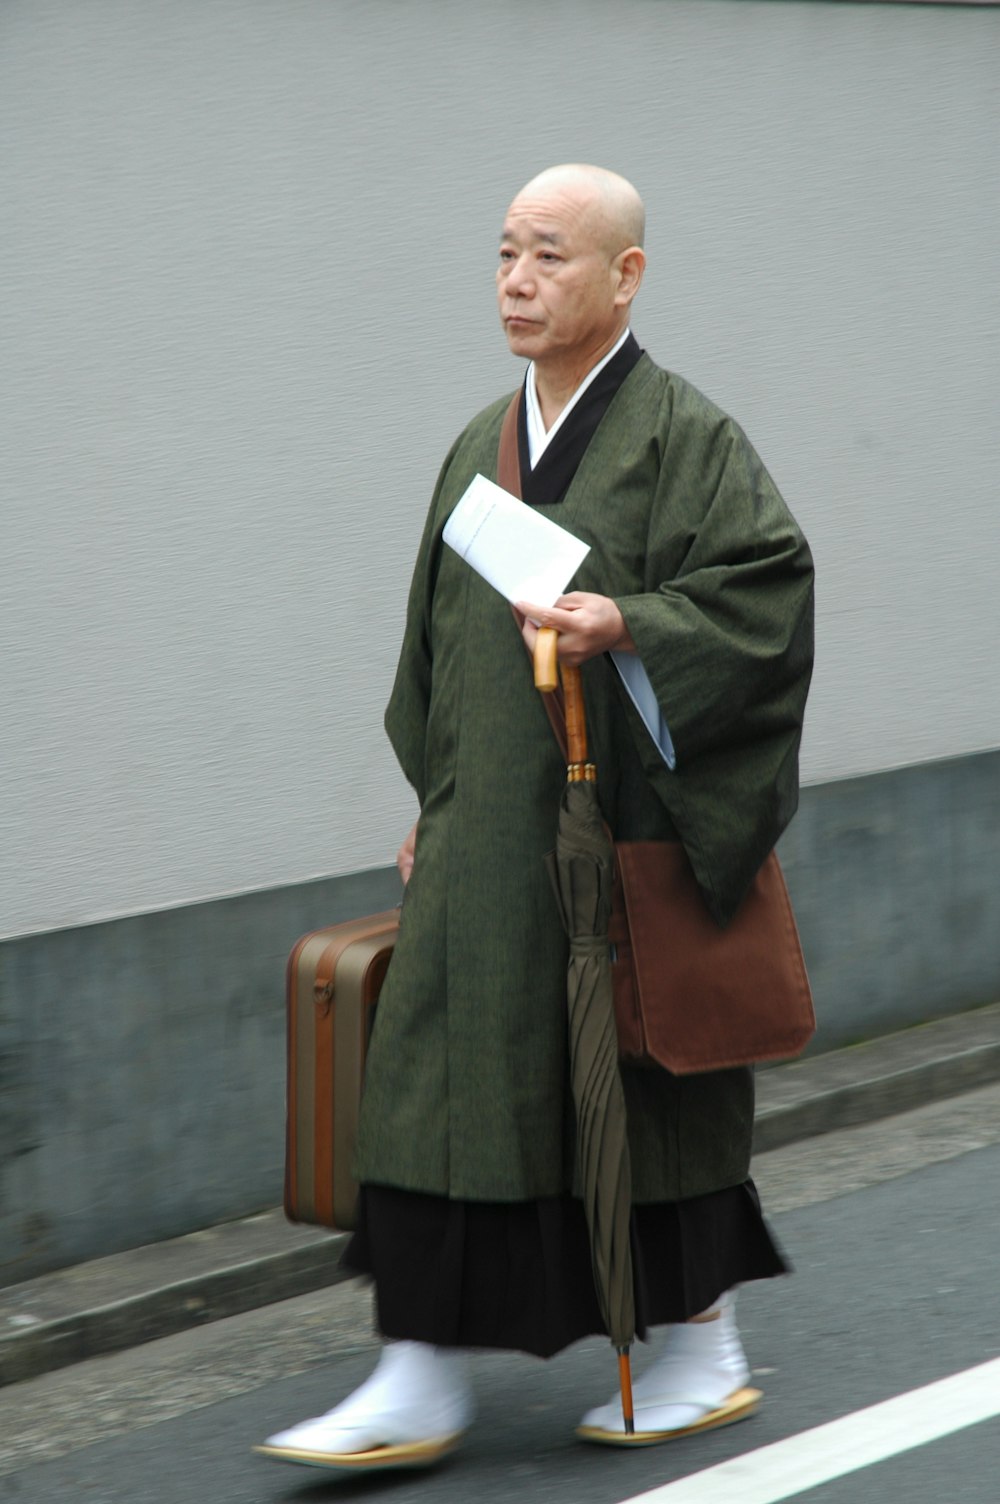 a man walking down a street holding a briefcase